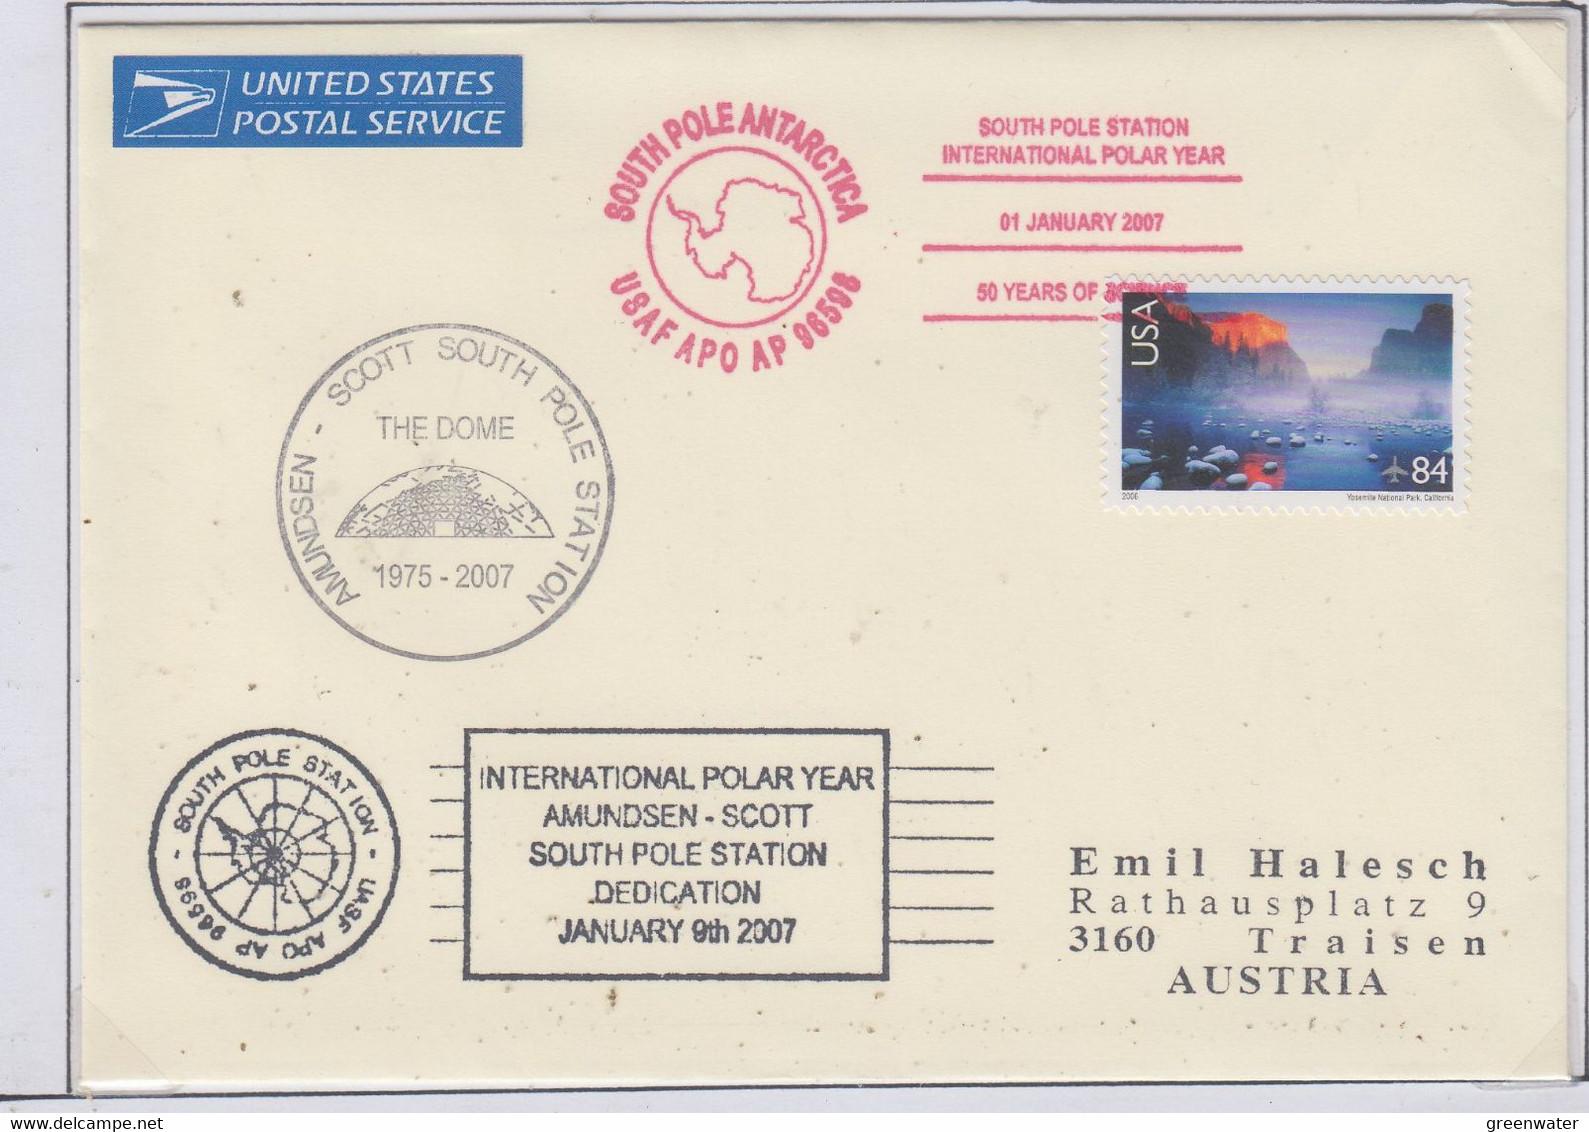 USA  South Pole Cover International Polar Year  Ca South Pole Station 01 JANUARY 2007 (PS191A) - Année Polaire Internationale